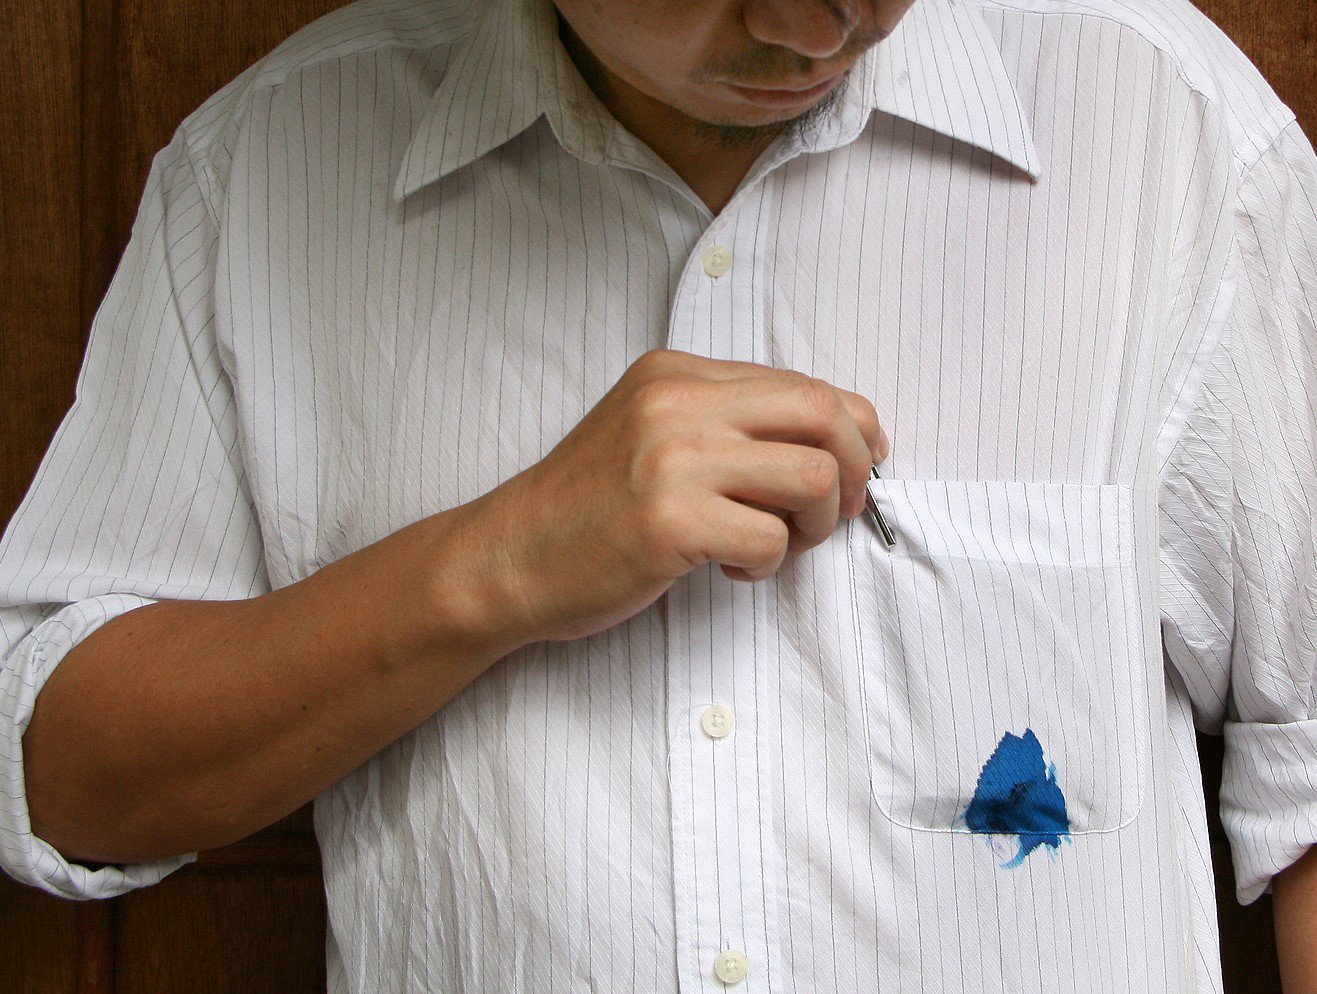 Ever Wondered Why Ballpoint Pens Leak Inside Your Pockets?